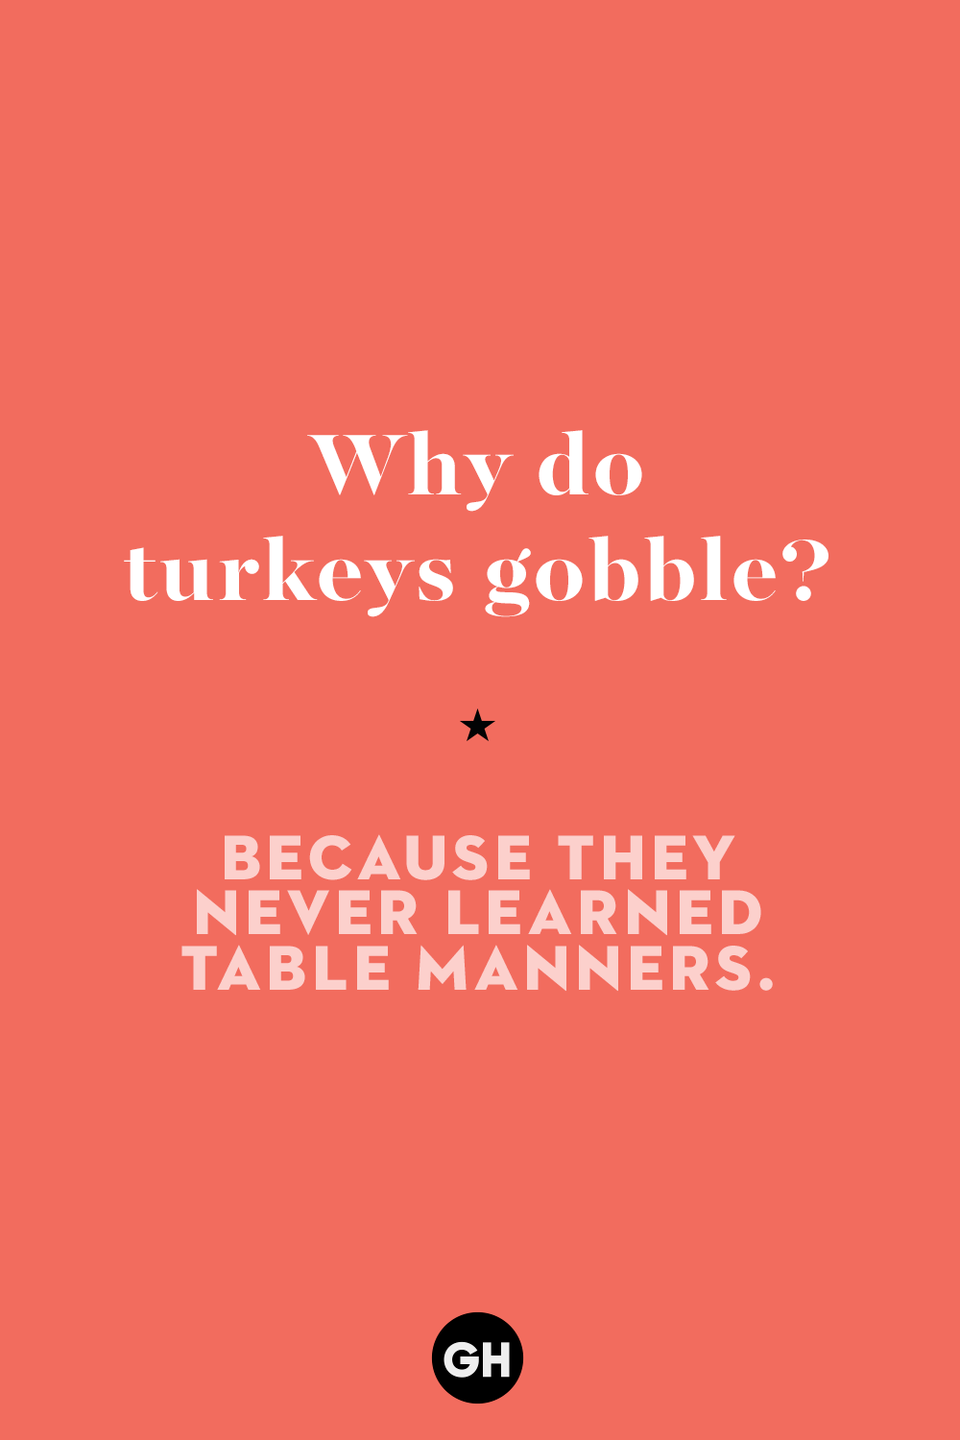 35) Why do turkeys gobble?